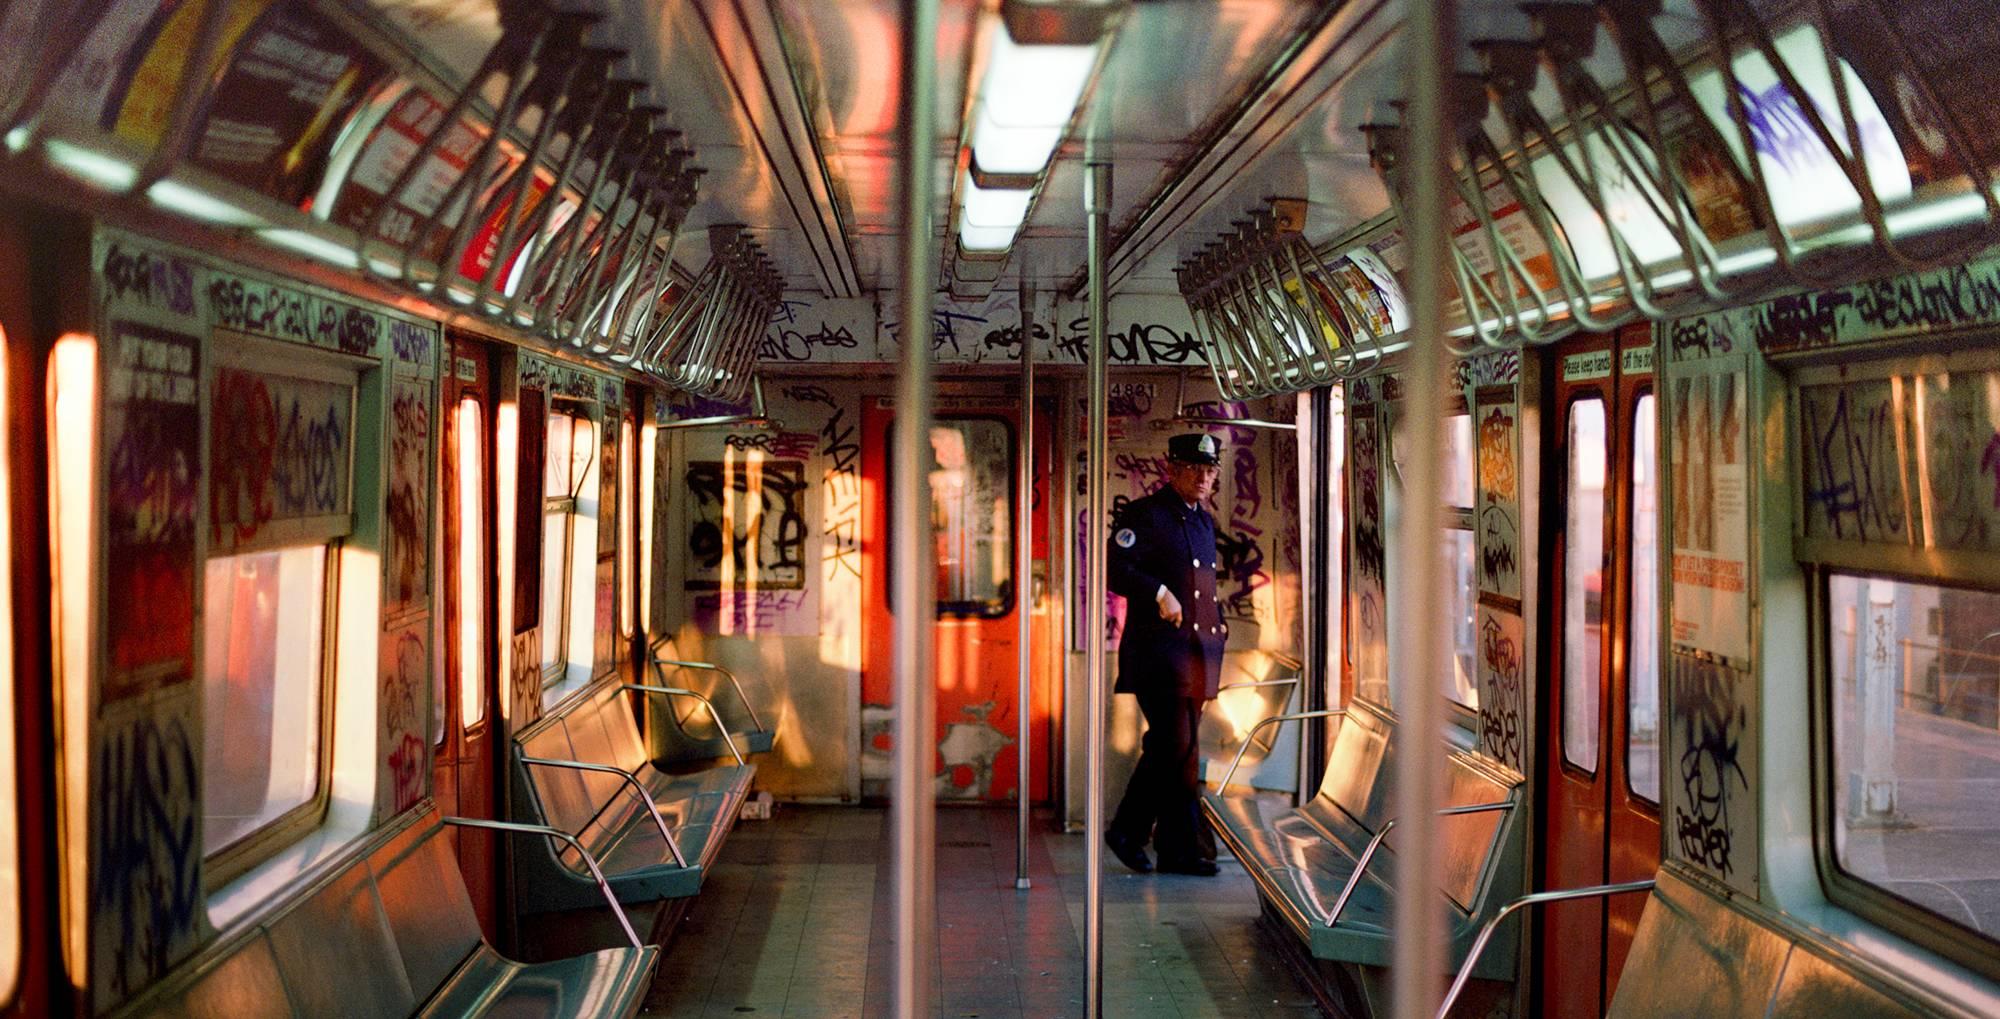 Robert Herman Color Photograph - "Train Conductor, " New York City, 1985